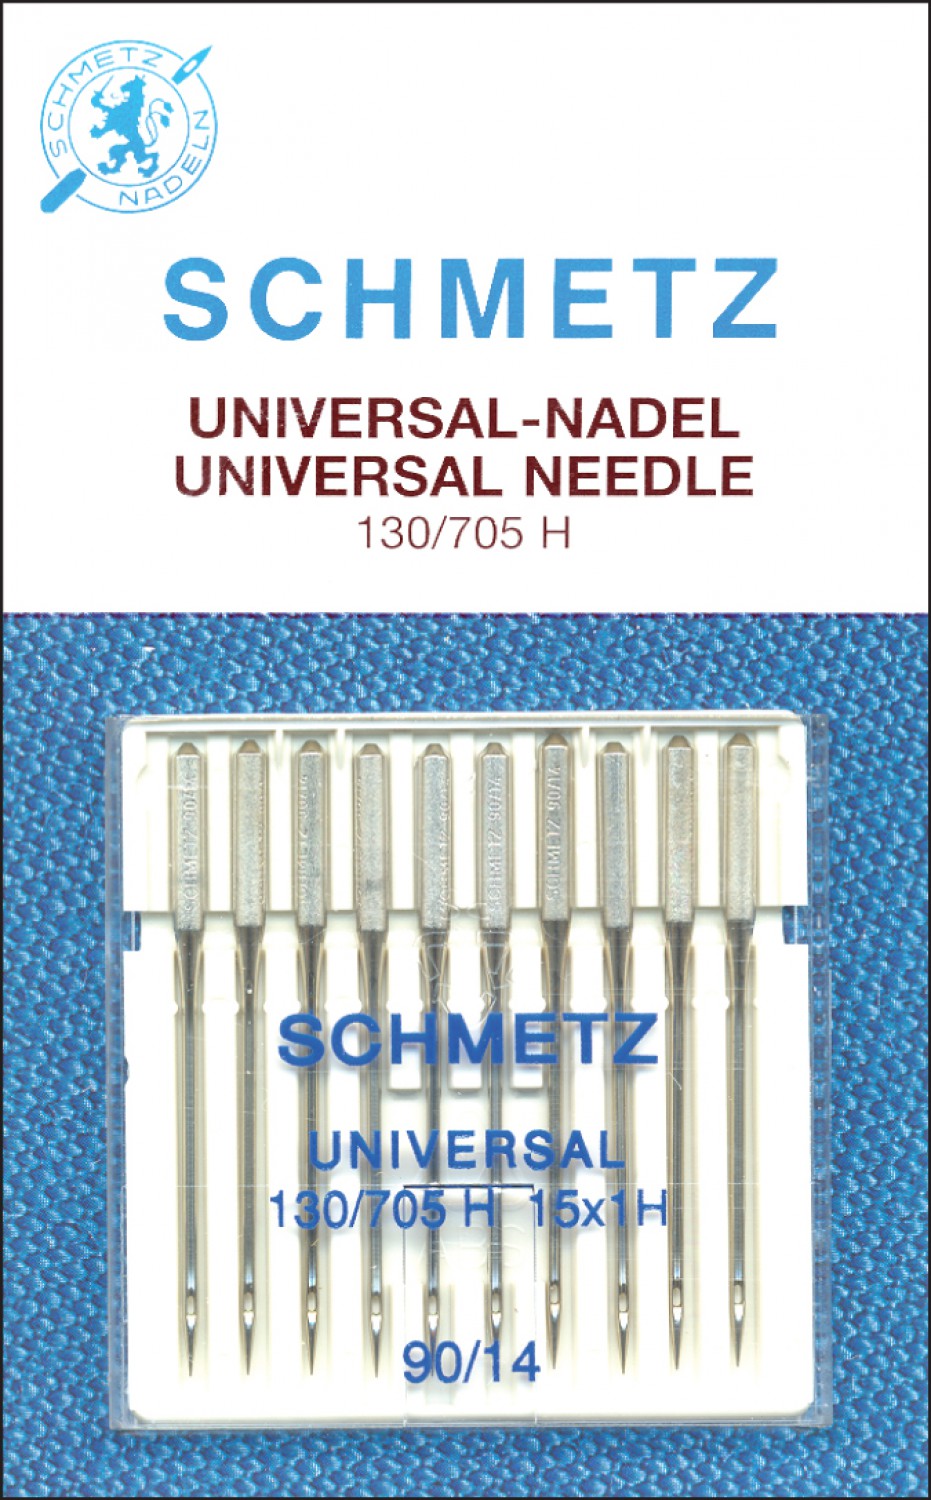 Schmetz Universal Needle - Size 90/14 - 1 Package of 10 Needles